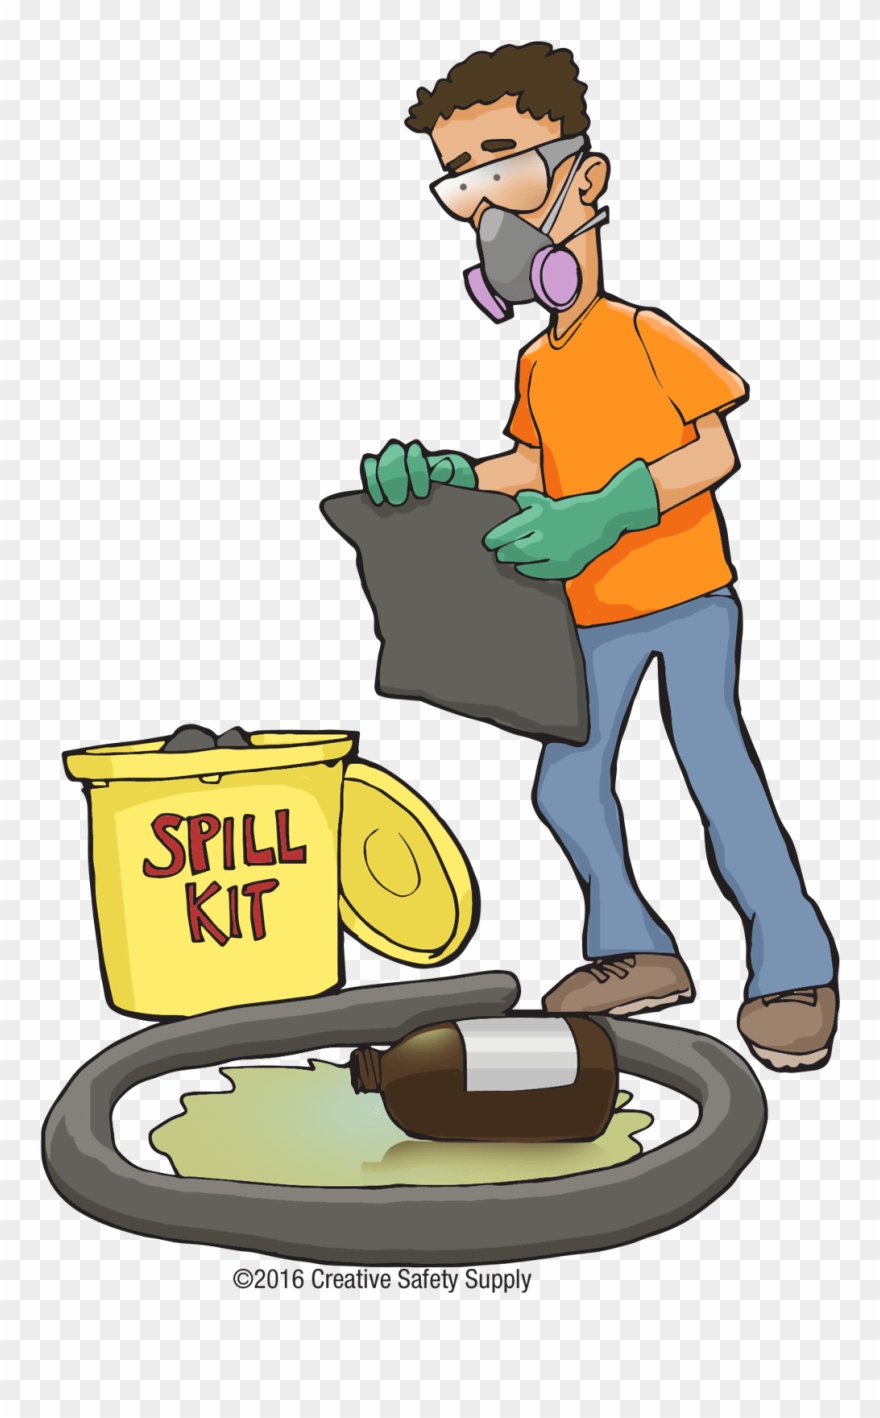 spill kit cartoon